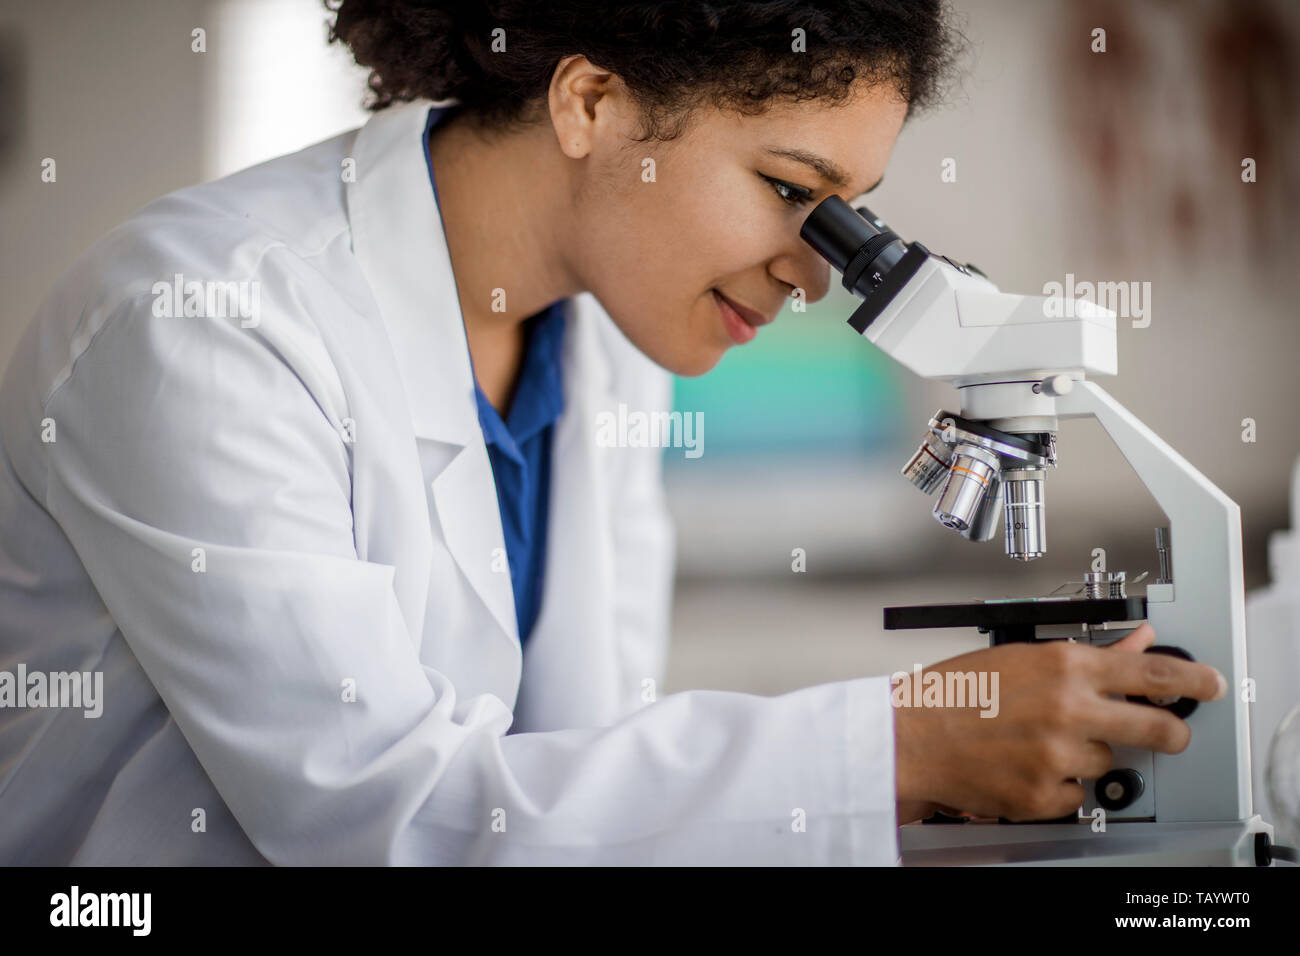 Scientist using a microscope. Stock Photo